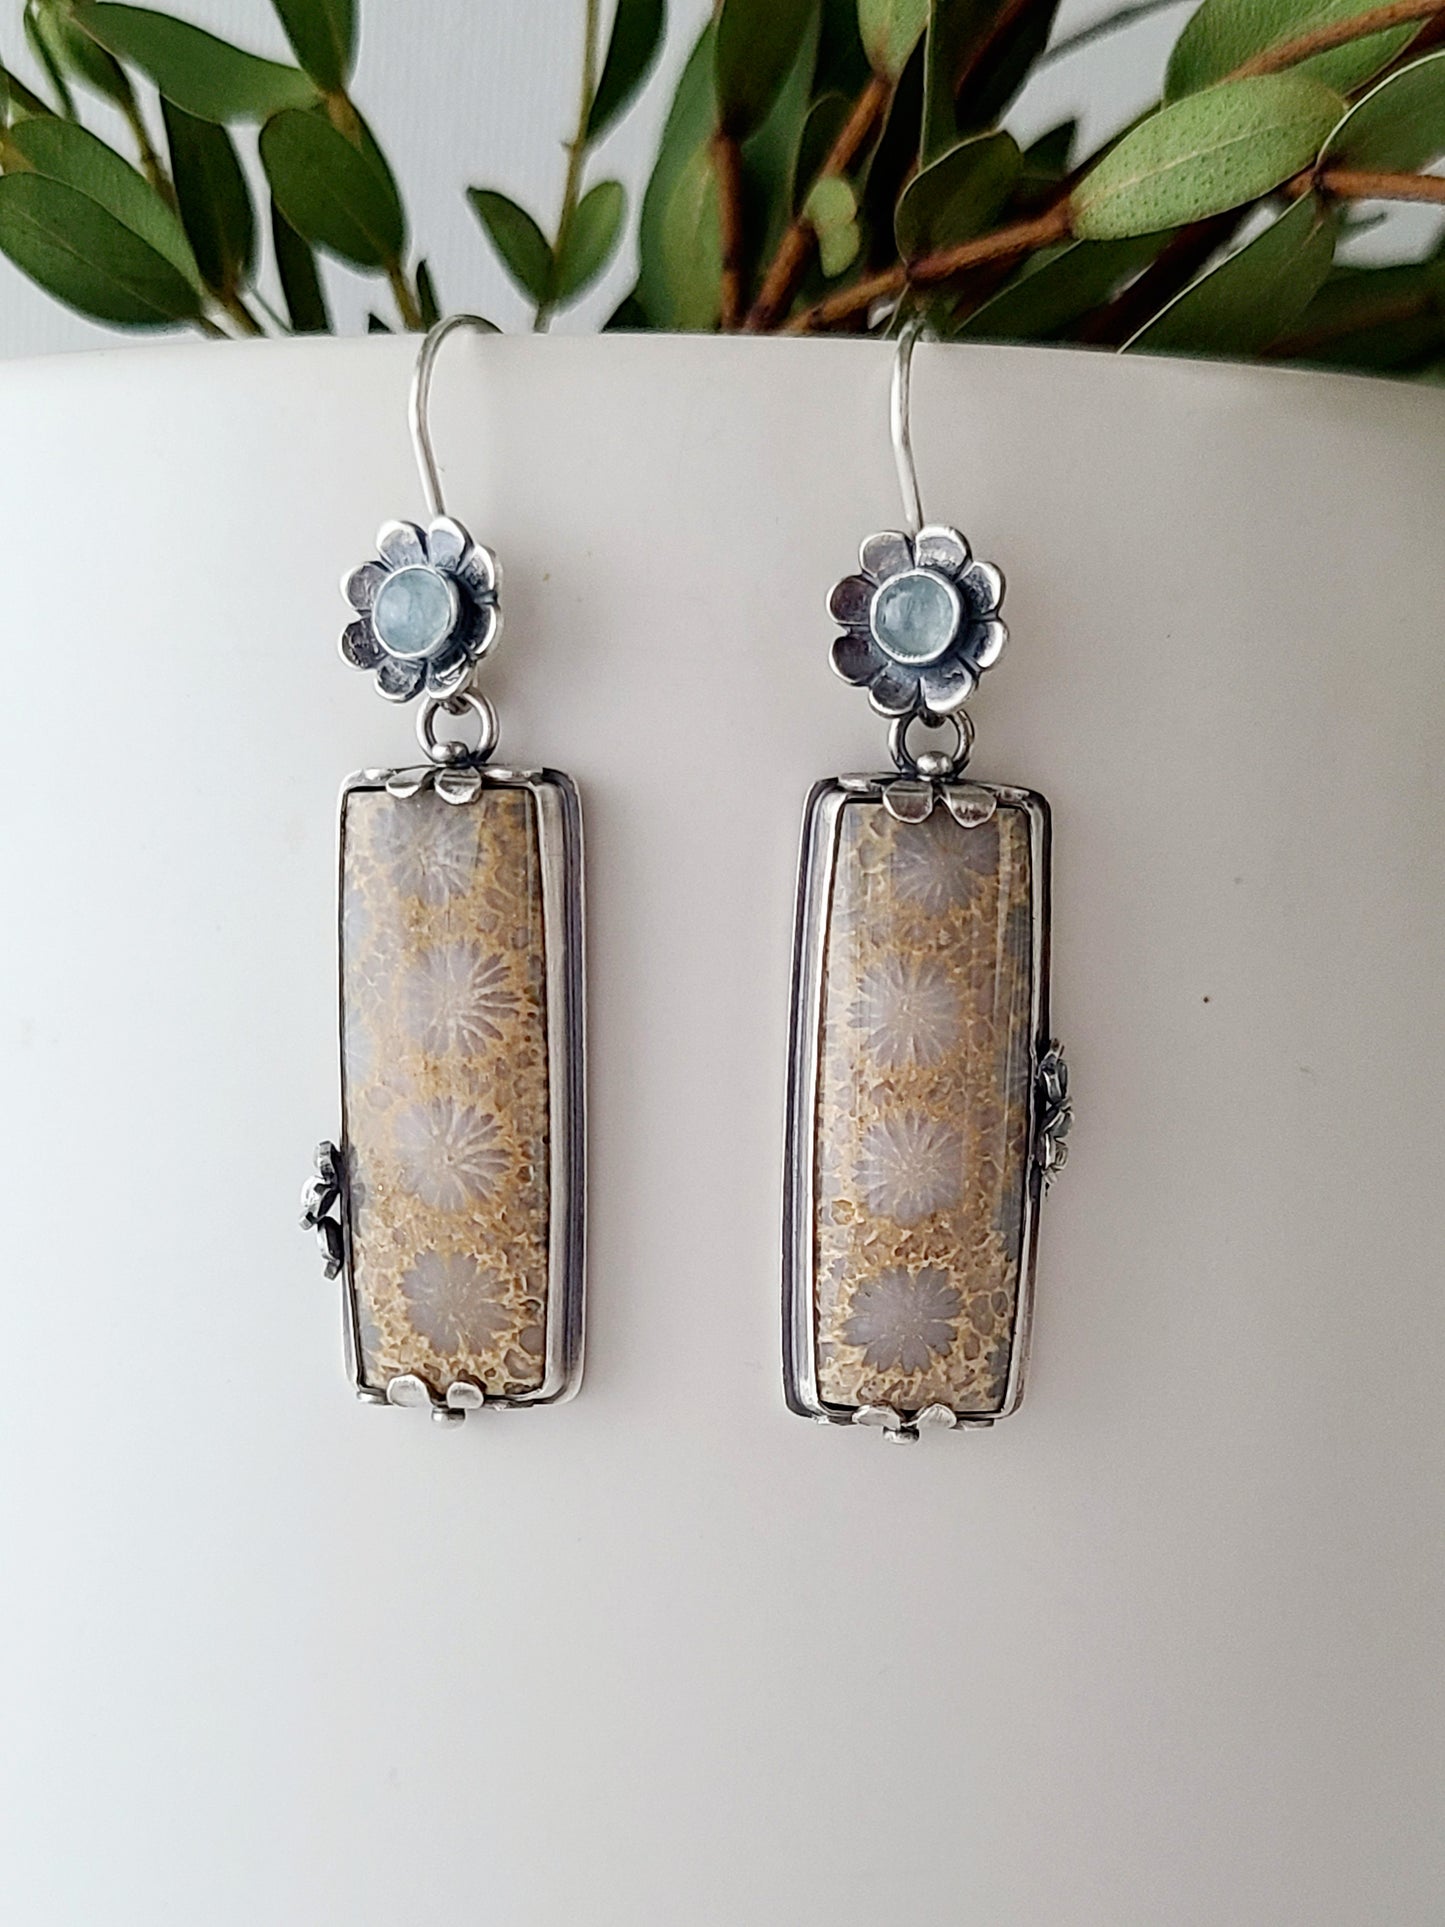 Flourish and Flower earrings with Aquamarine